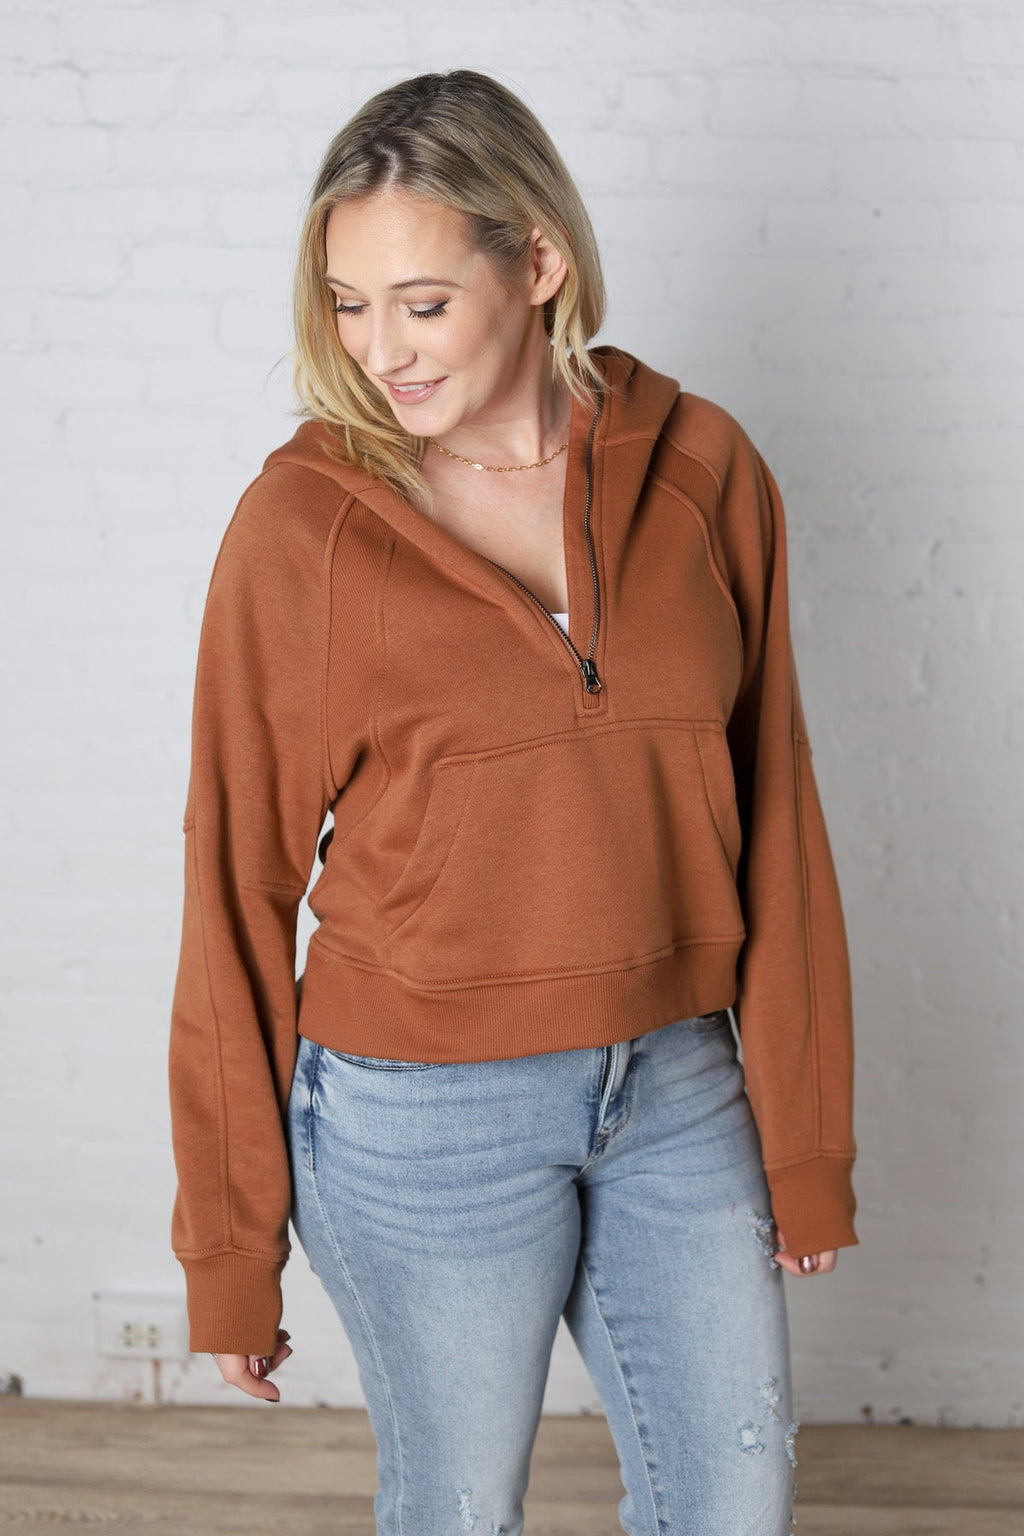 Thursday Fashion Files Link Up #237 – Perfect Oversized Sweatshirt